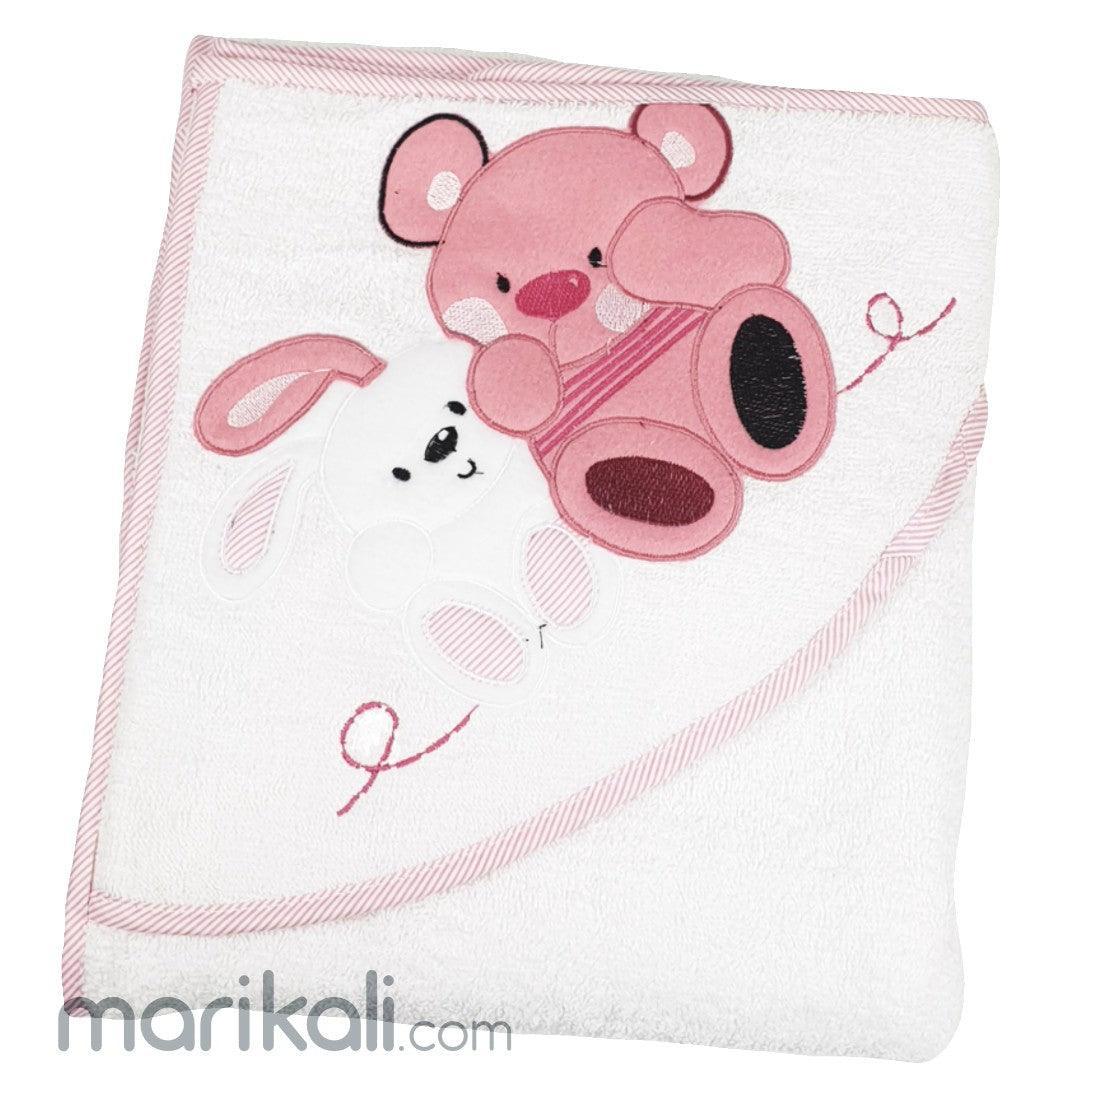 mk Collection - mk Collection Bath Towel Teddy & Bunny Pink - Mari Kali Stores Cyprus